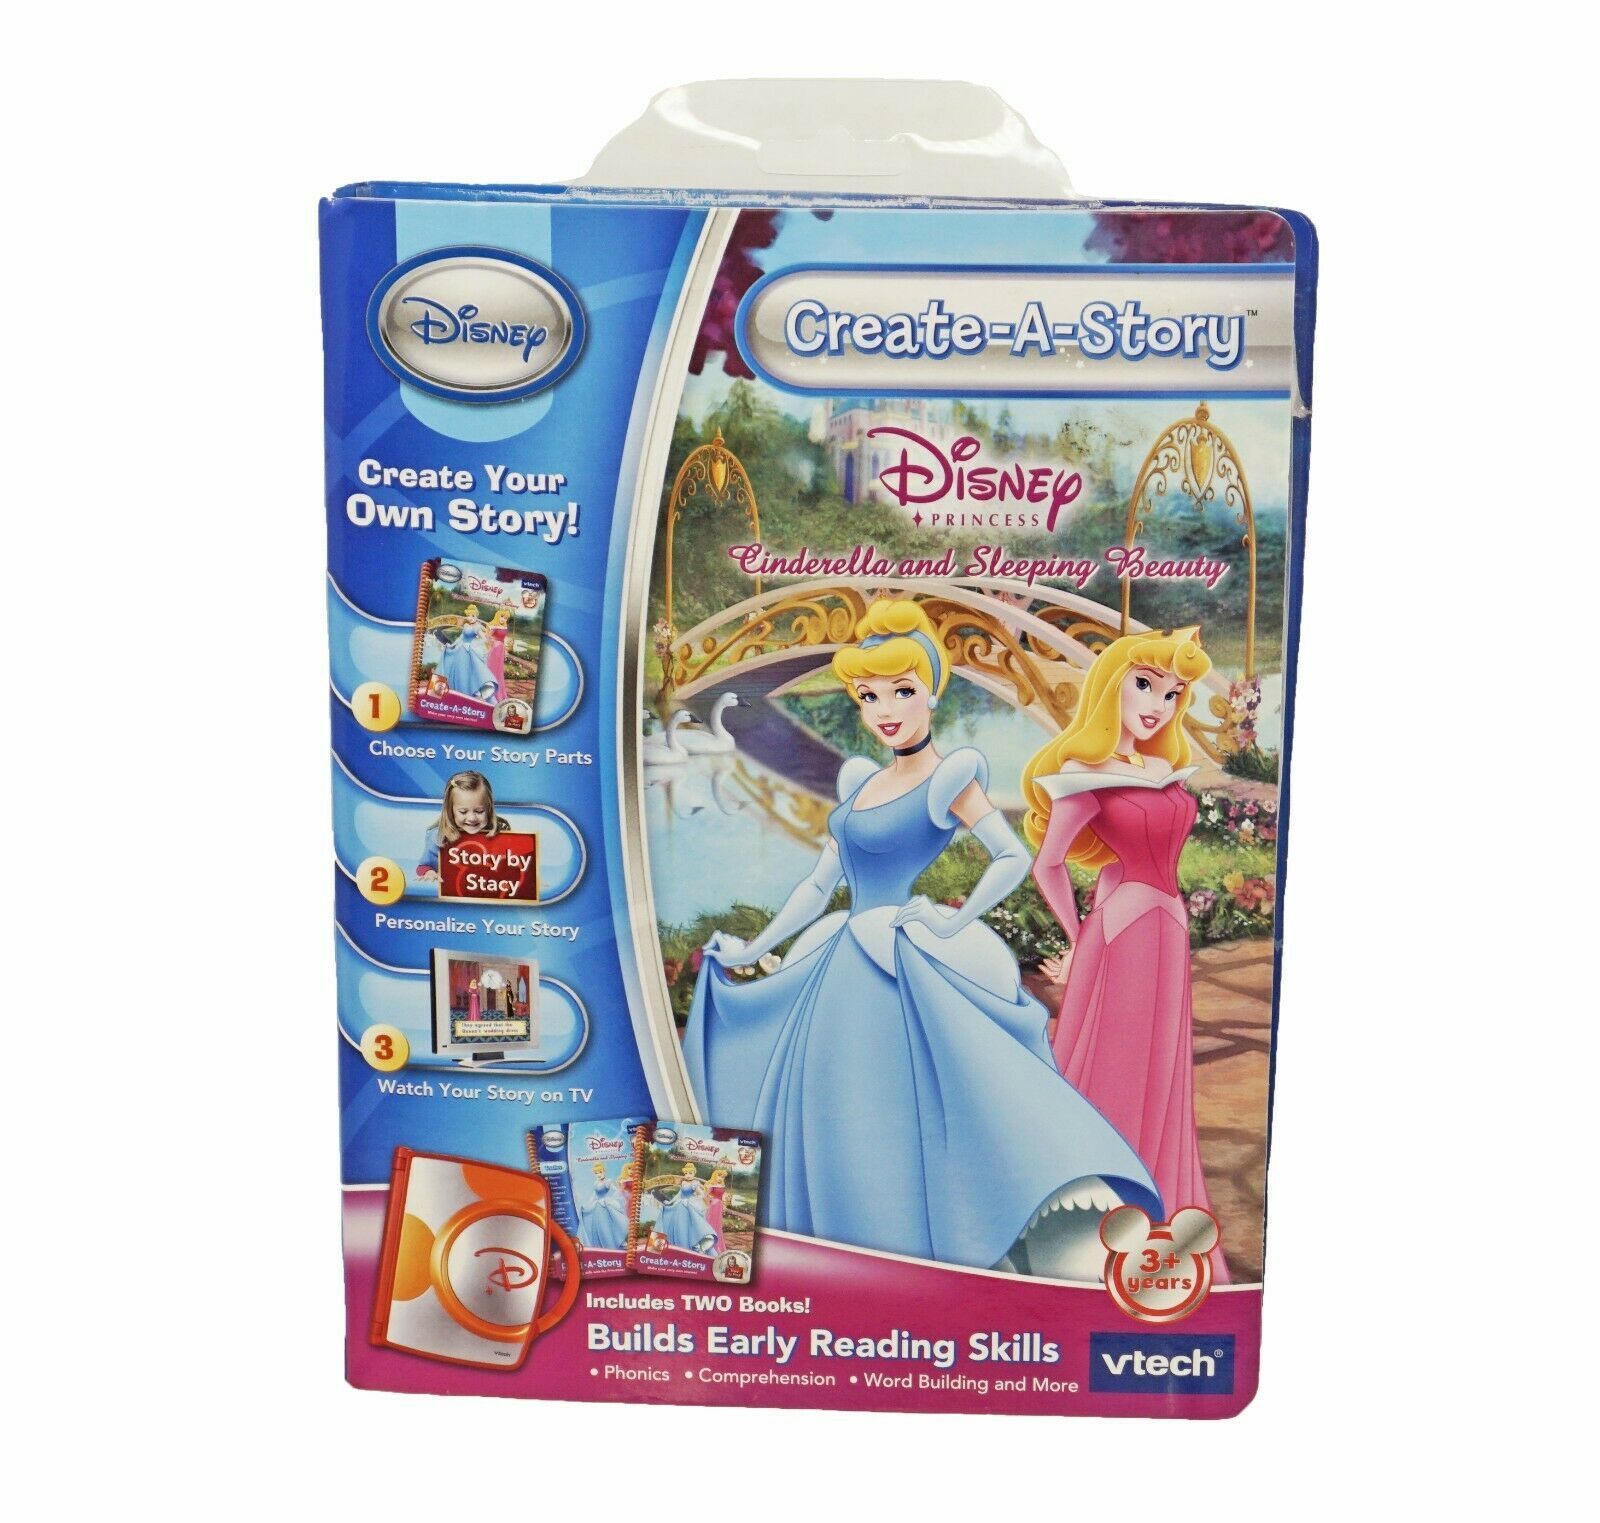 Disney Cinderella & Sleeping Beauty - 2 Books & Cartridge Vtech Create-A-Story - $6.00